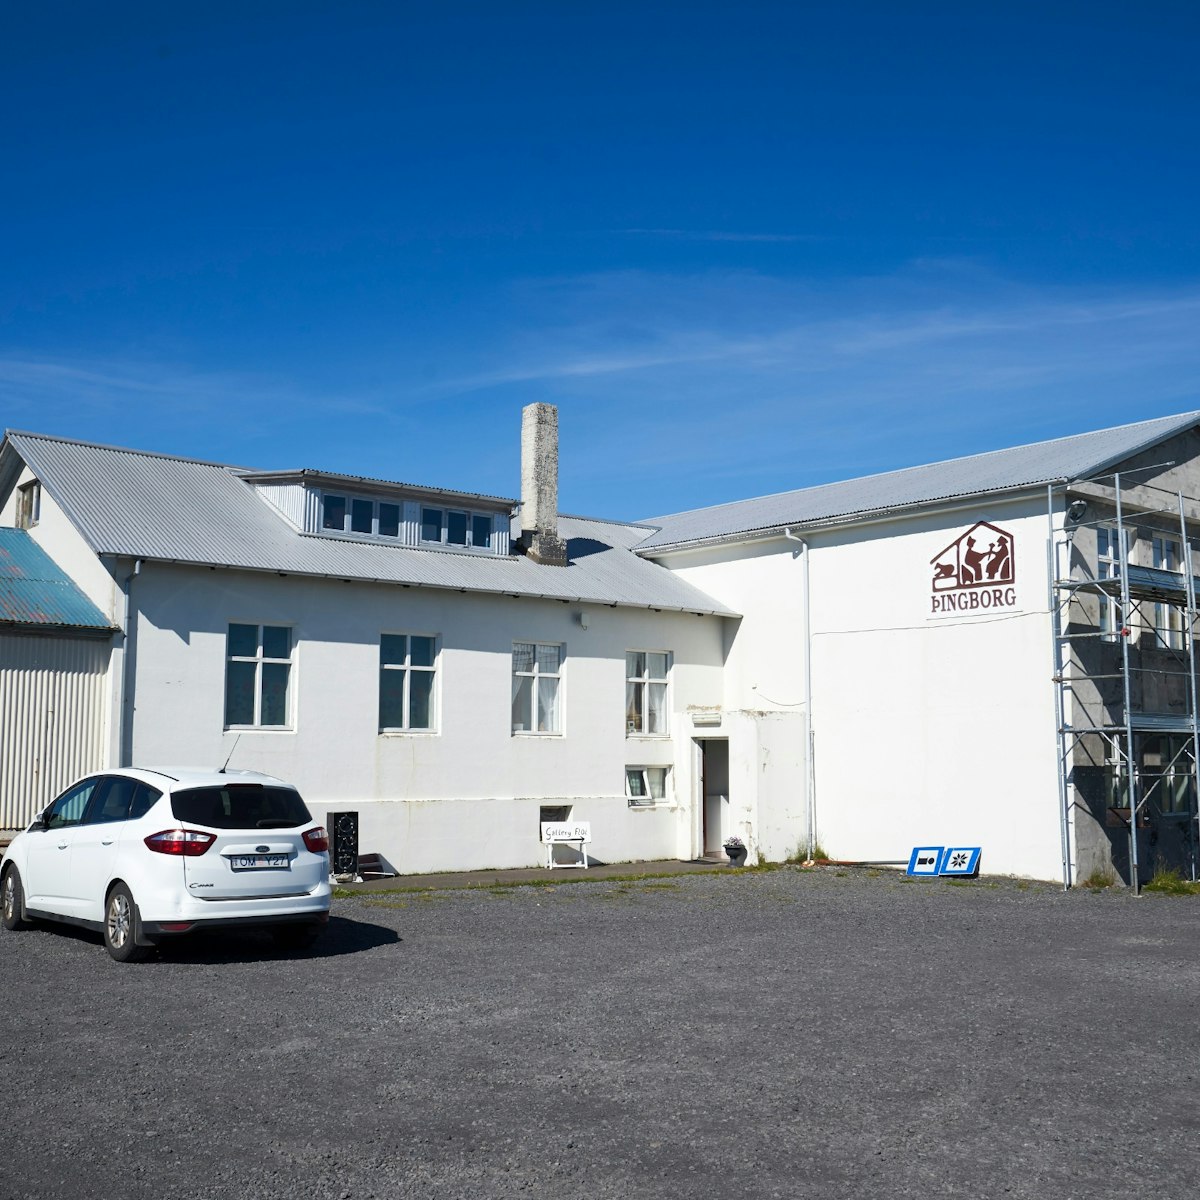 Þingborg, wool workshop, interior and exterior